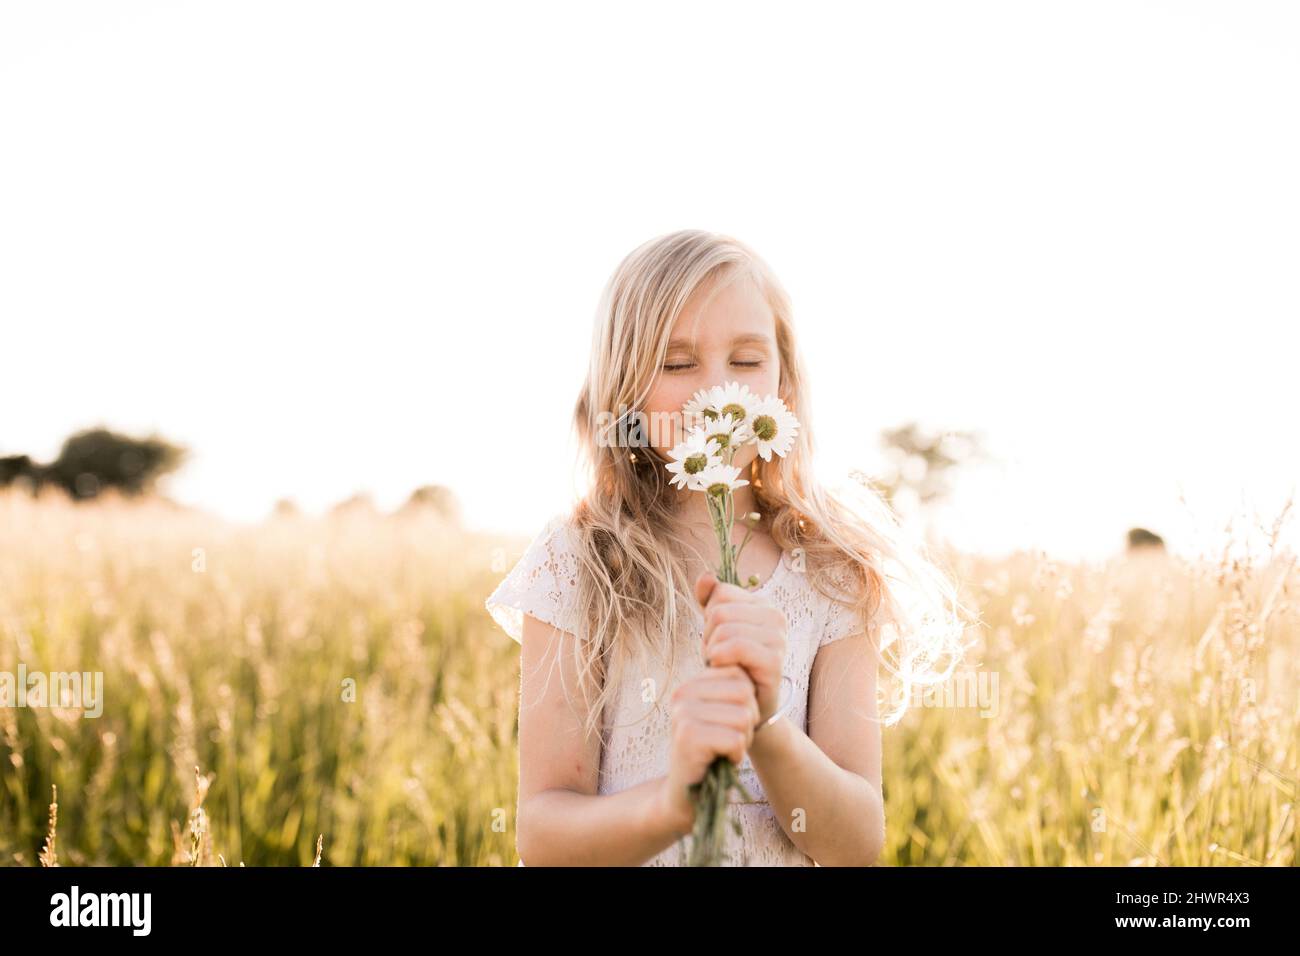 Cute girl smelling daisy flowers in field Stock Photo